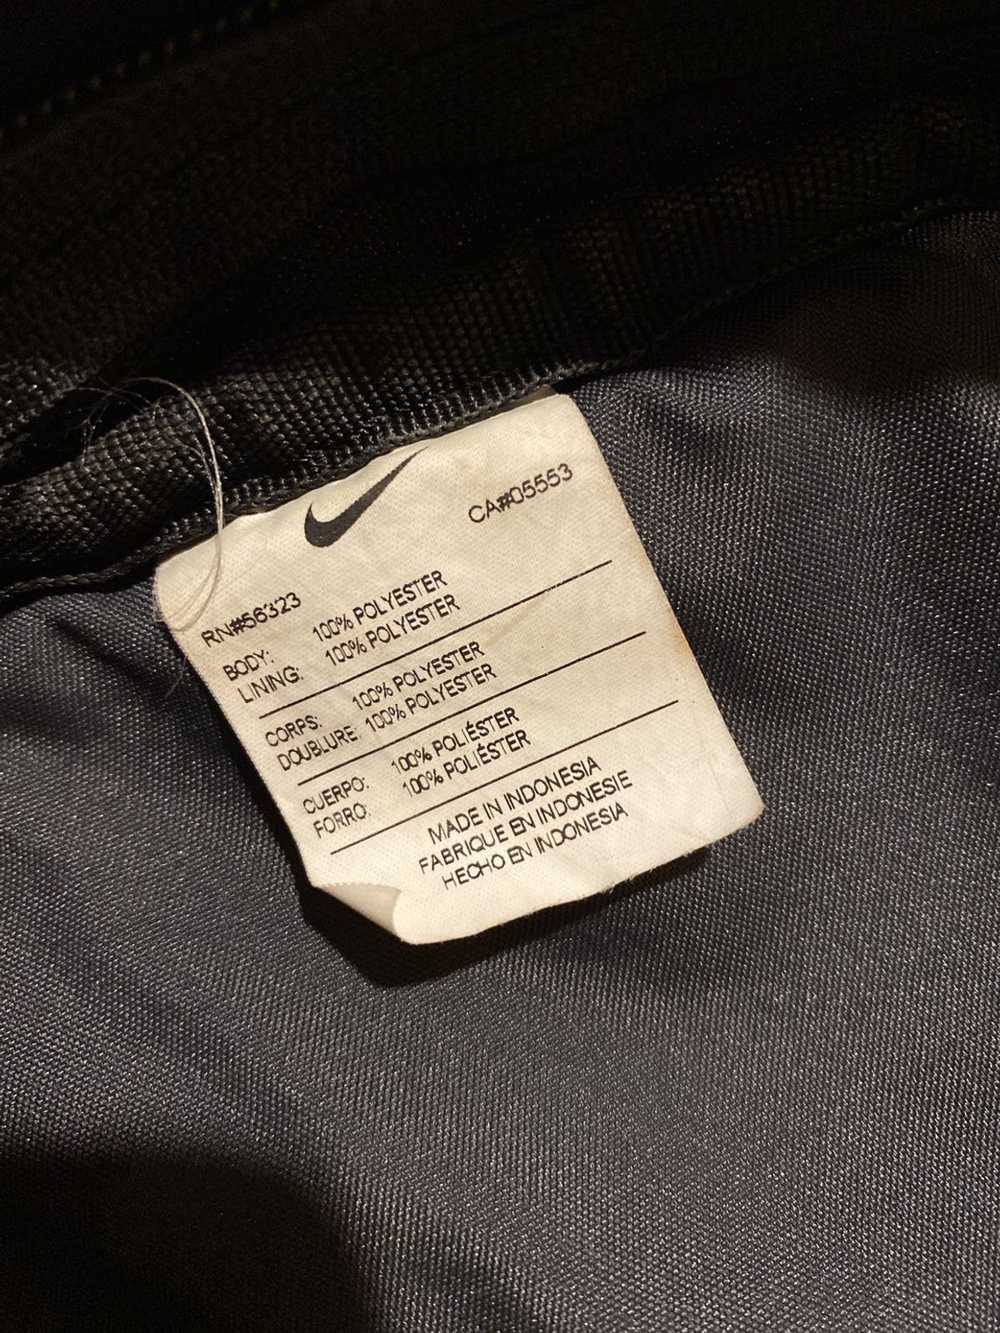 Nike Nike basketball backpack black - image 6